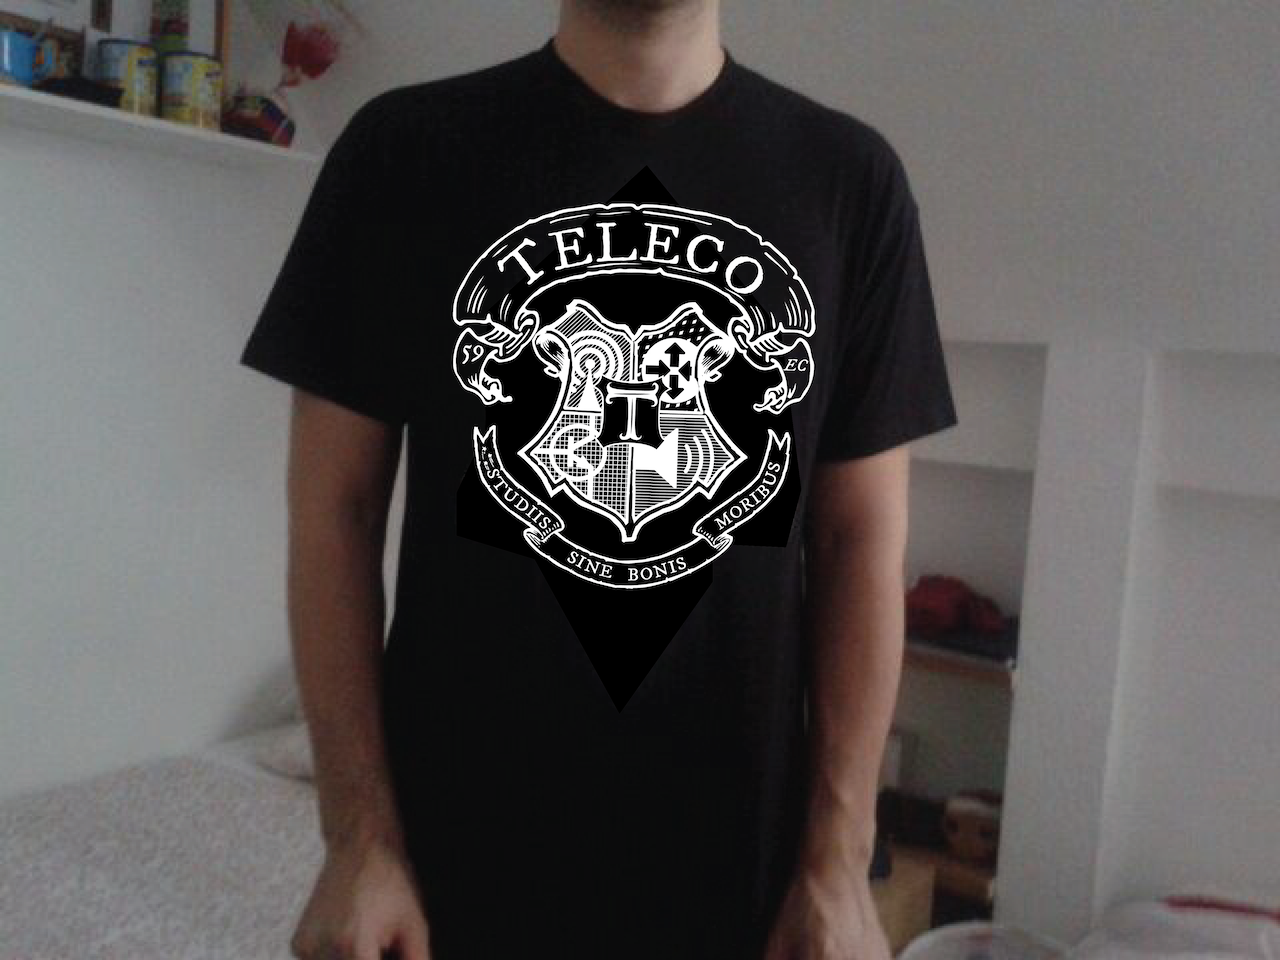 Hogwarts Teleco T-shirt